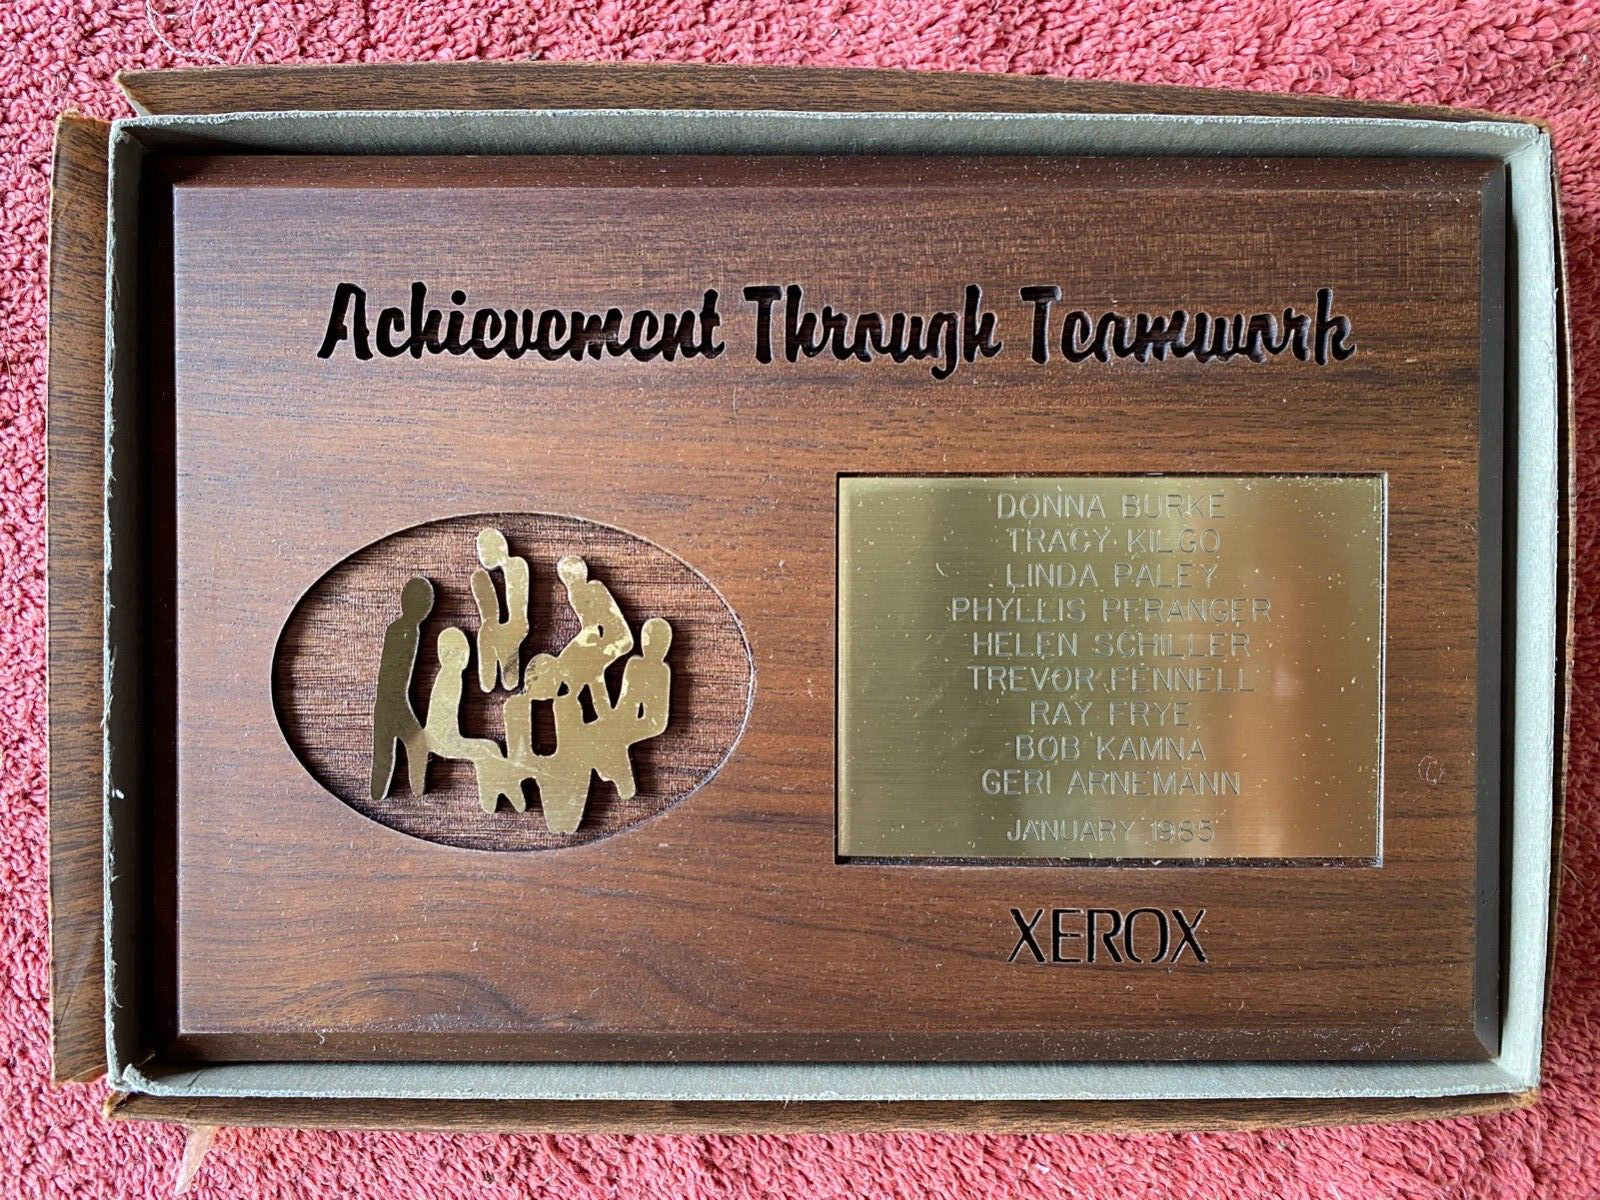 Vintage Xerox Corporation Wooden Plaque 1985 Achievement Through Teamwork Award